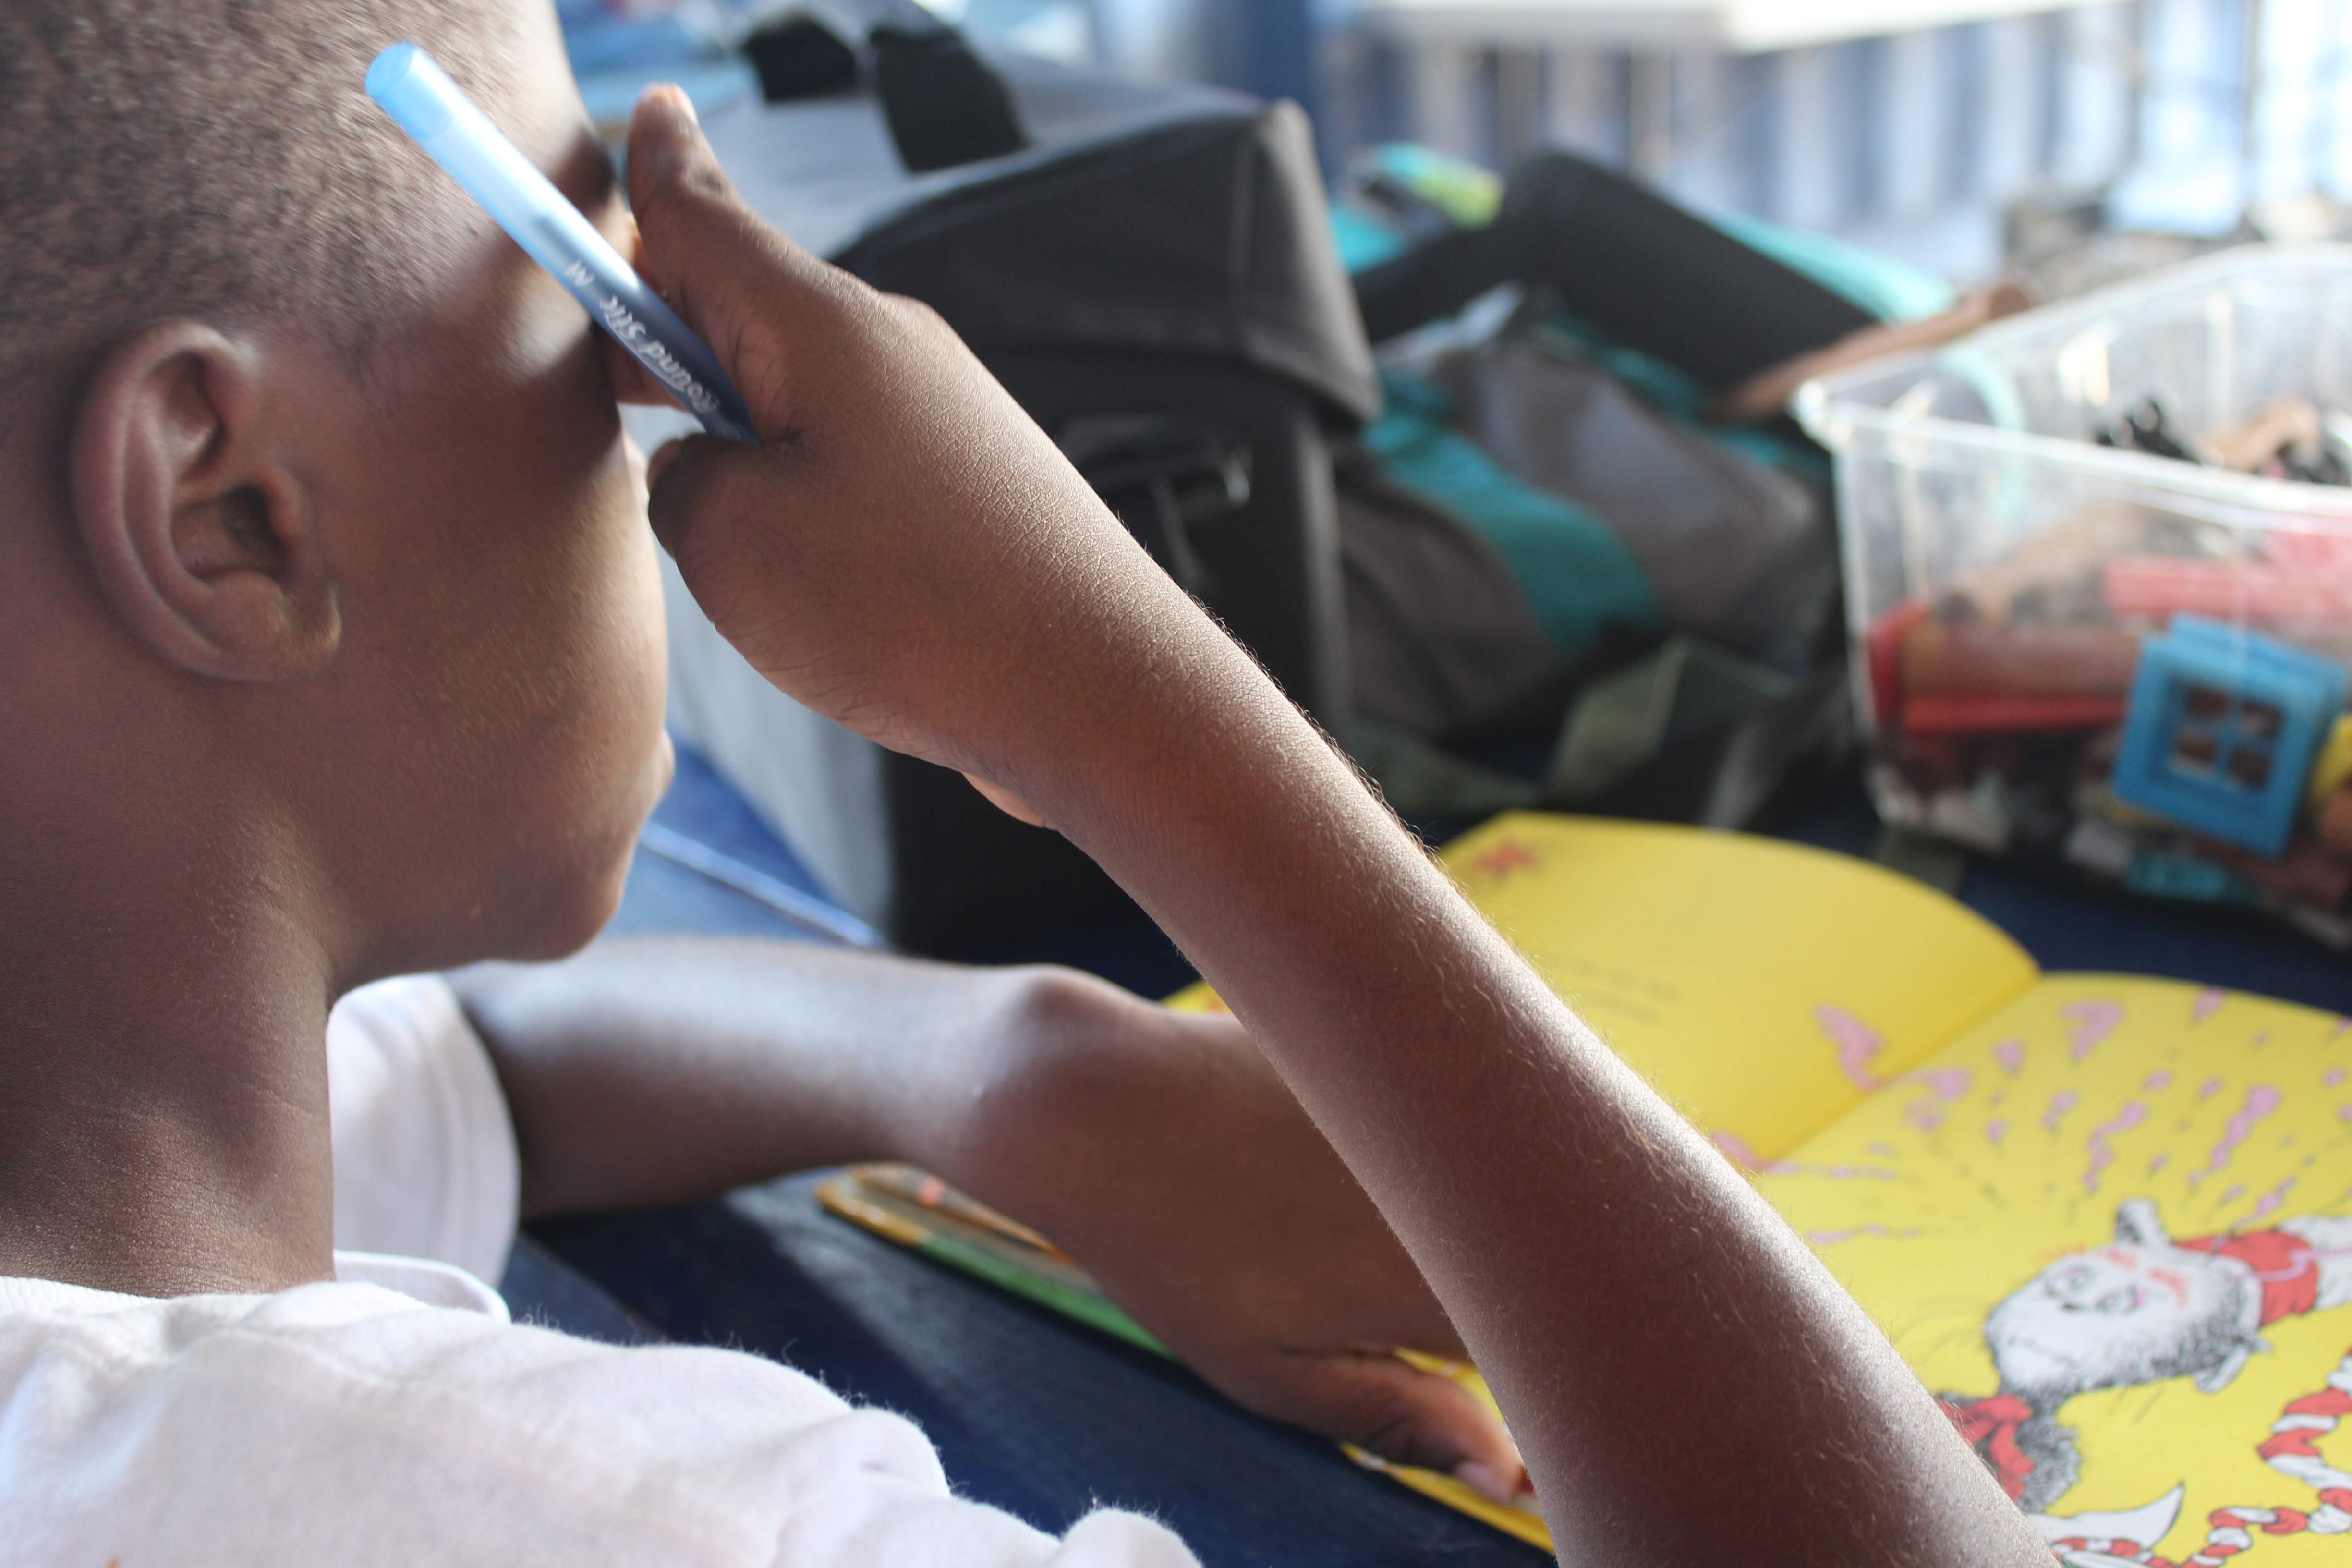 Teaching is a popular voluntourism activity. Here we see a child doing homework. Photo:  Breana Johnson